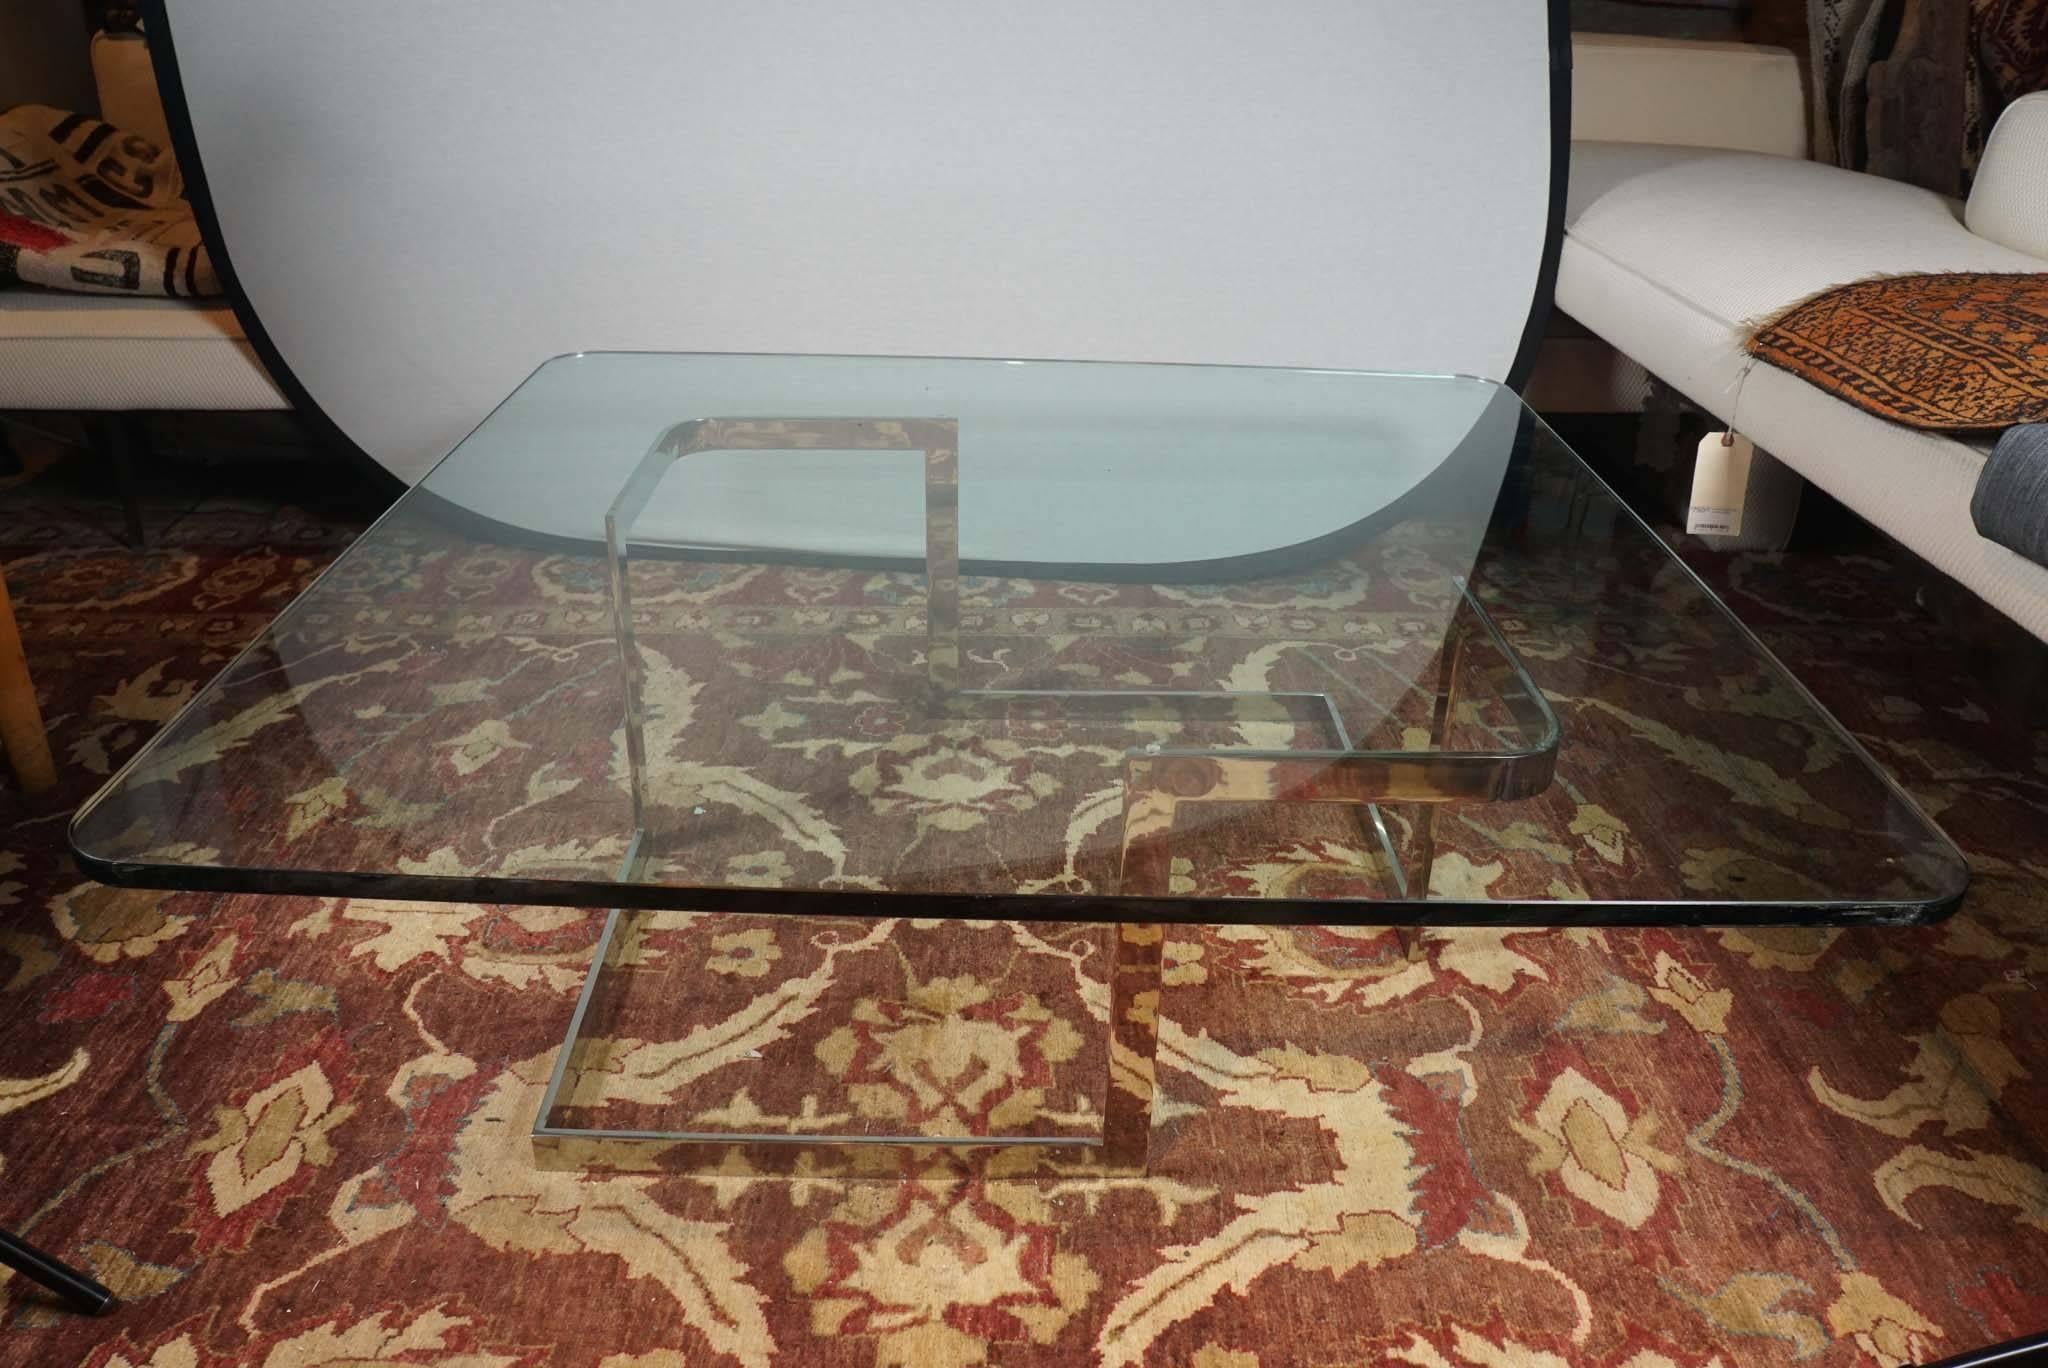 20th Century Glass and chrome mid-century modern coffee table by Vladimir Kagan (custom)